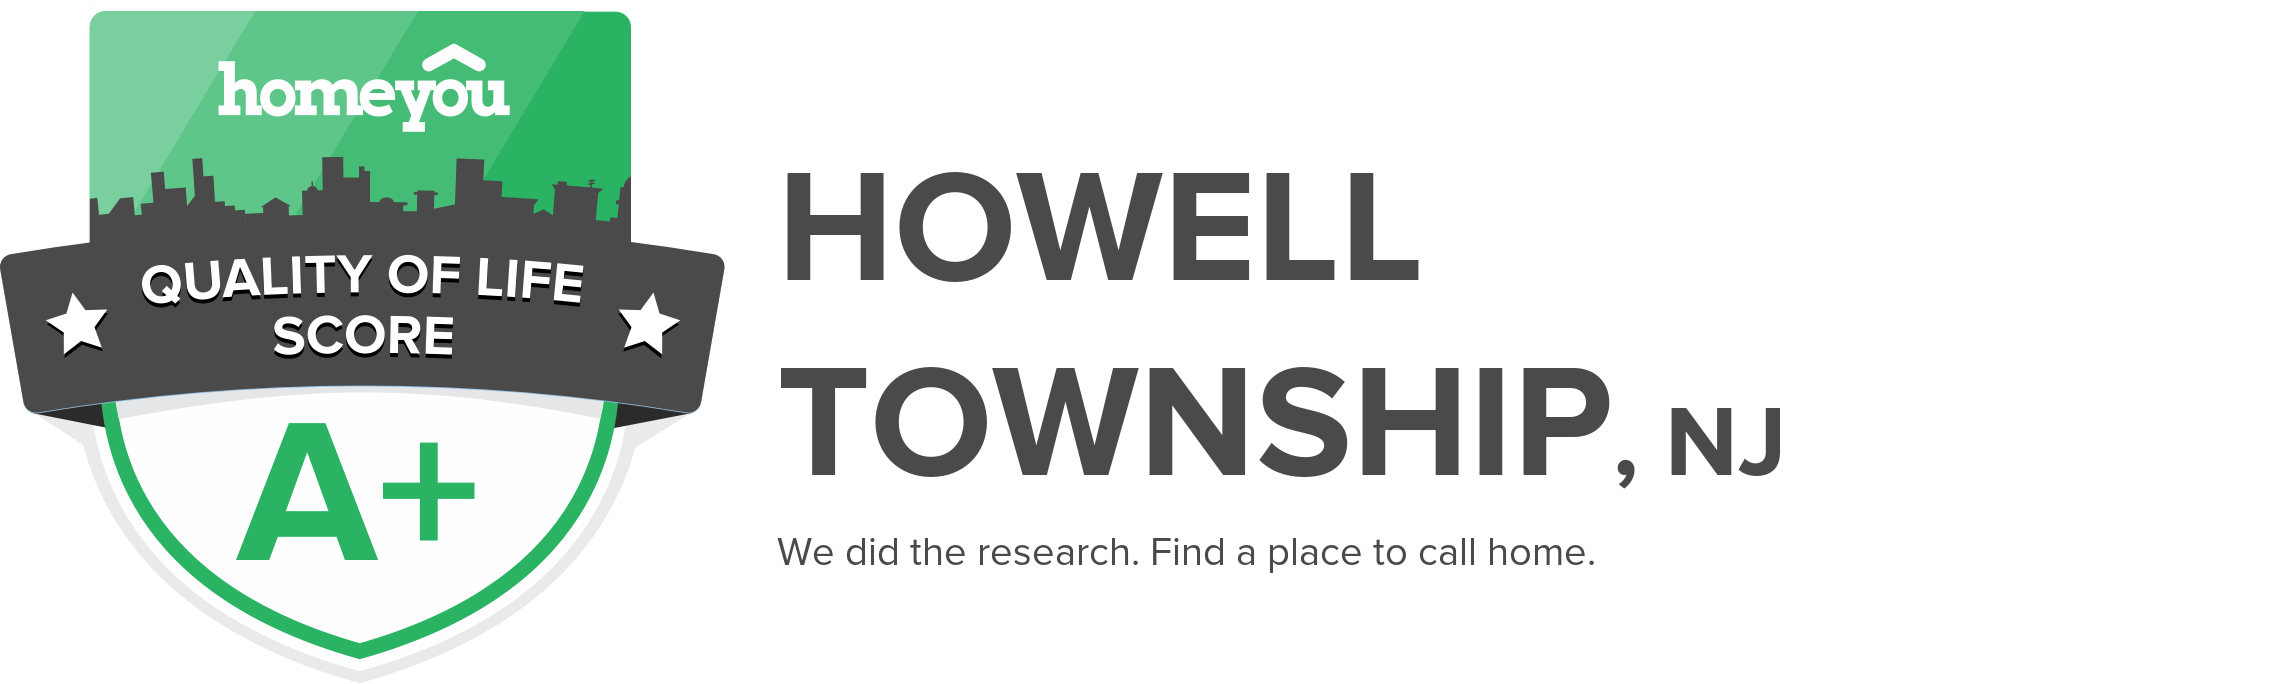 Howell Township, NJ